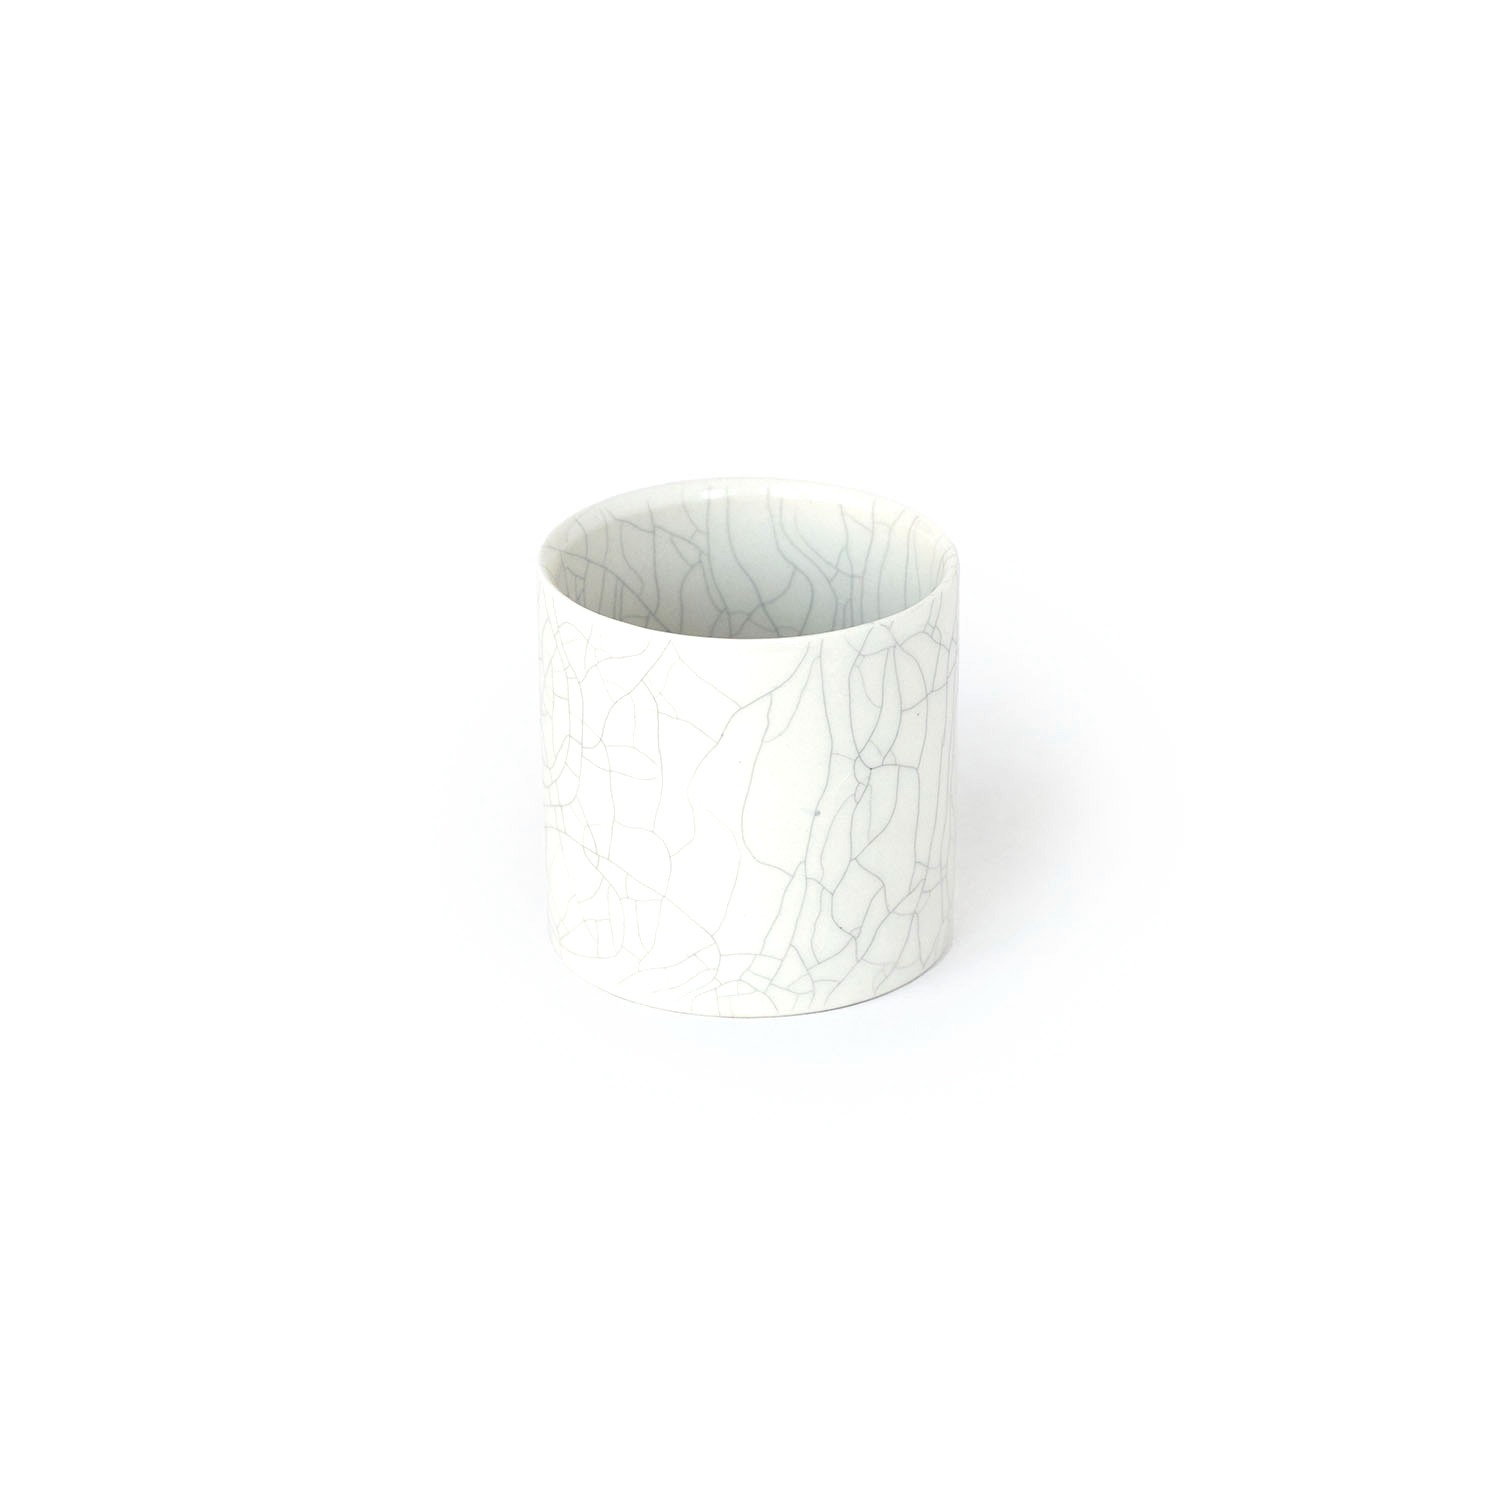 Tea Cup(Cylinder), Crackleware